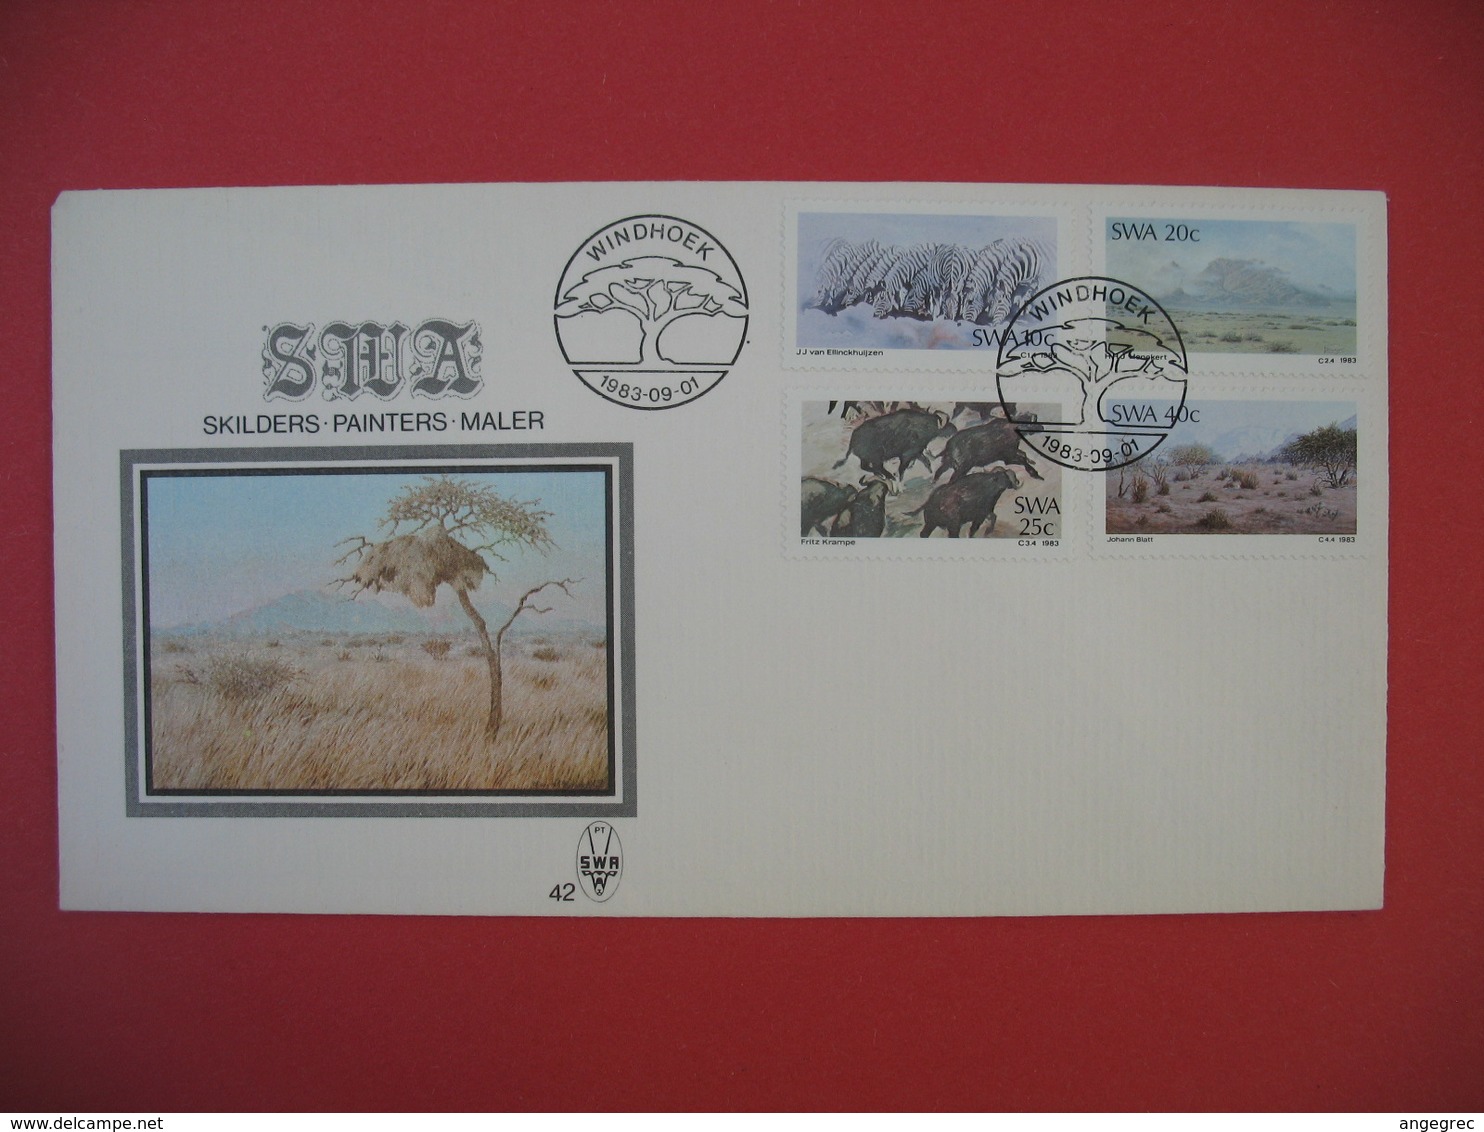 Enveloppe 1983 Afrique Du Sud Ouest - Skilders-Painters-Maler - Afrique Du Sud-Ouest (1923-1990)